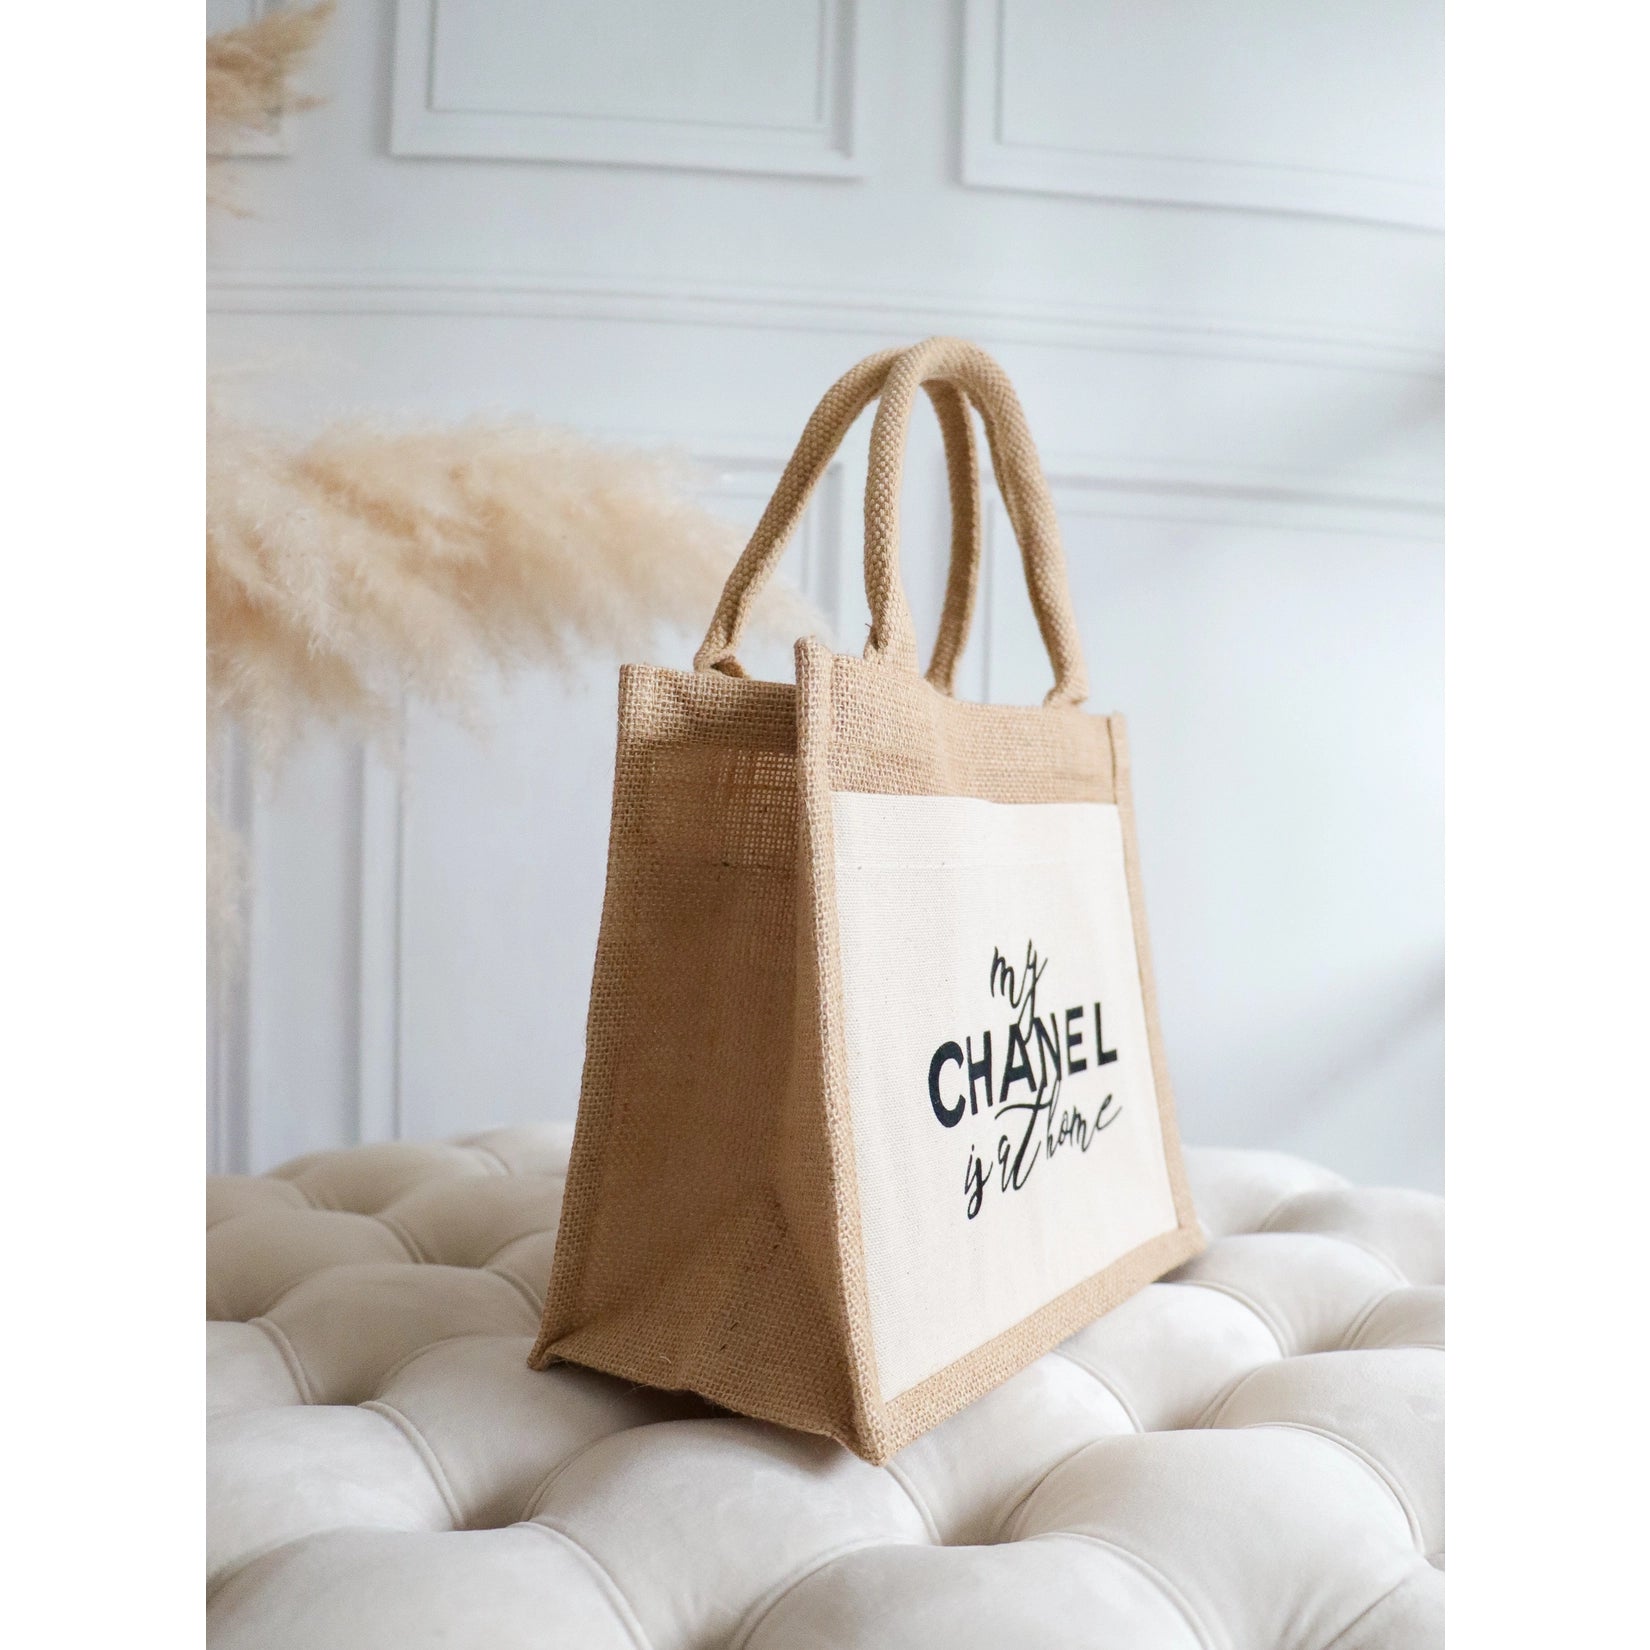 Chanel Jute Bag 